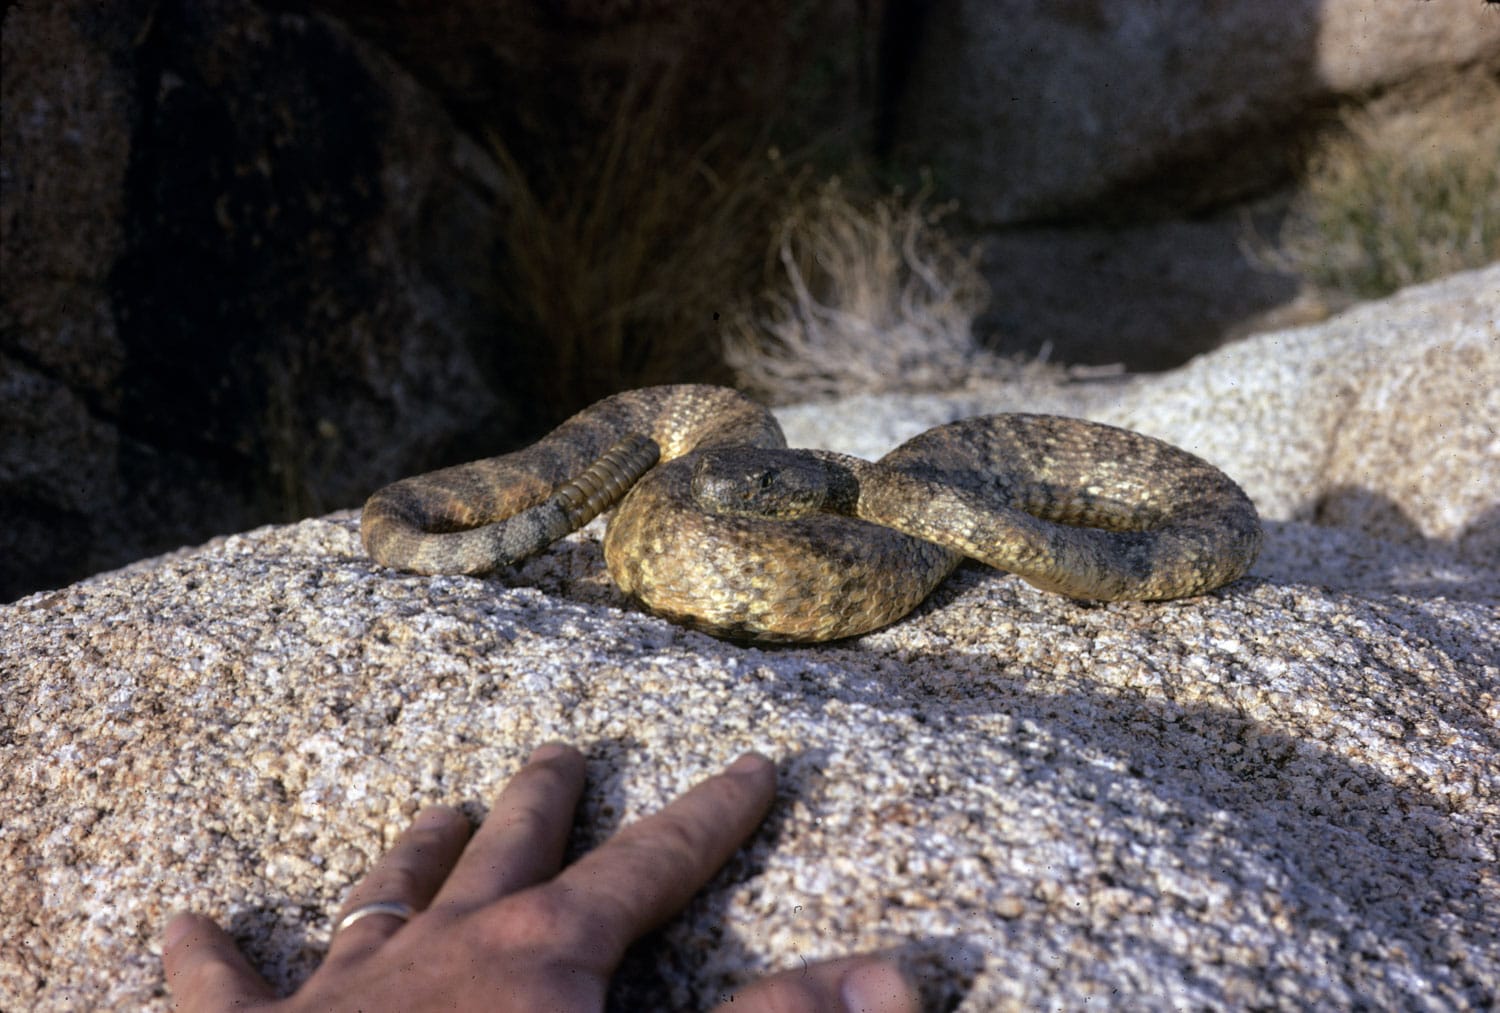 Hiking and Rattlesnake Safety Tips